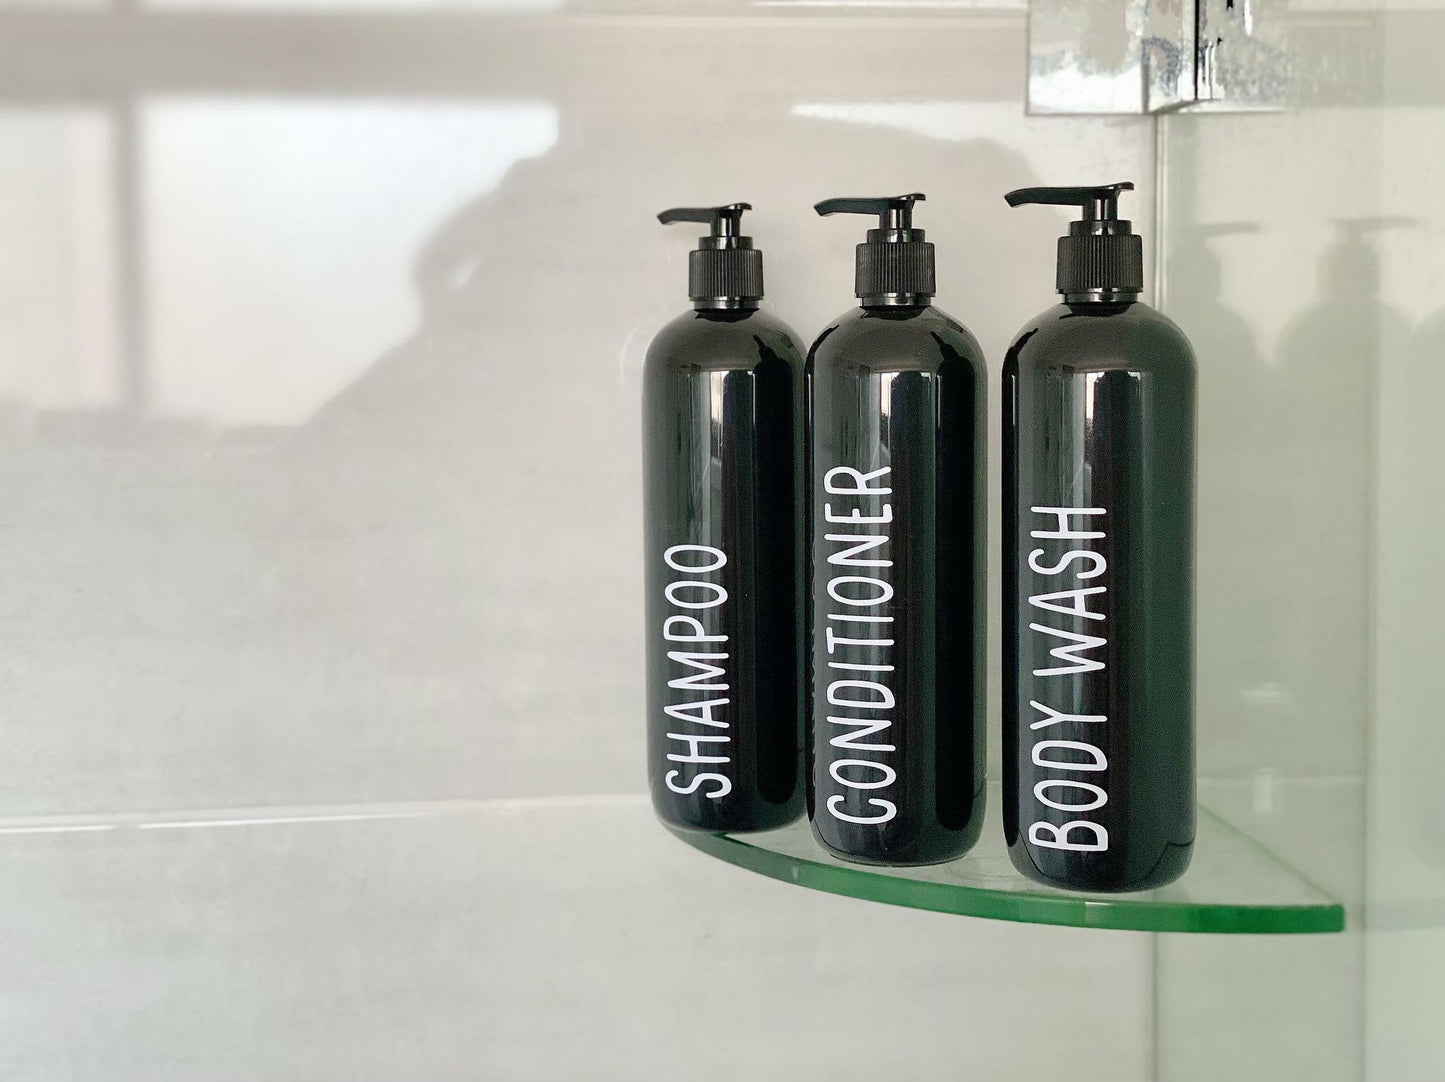 Set of 3 Black Shampoo, Conditioner and Body Wash